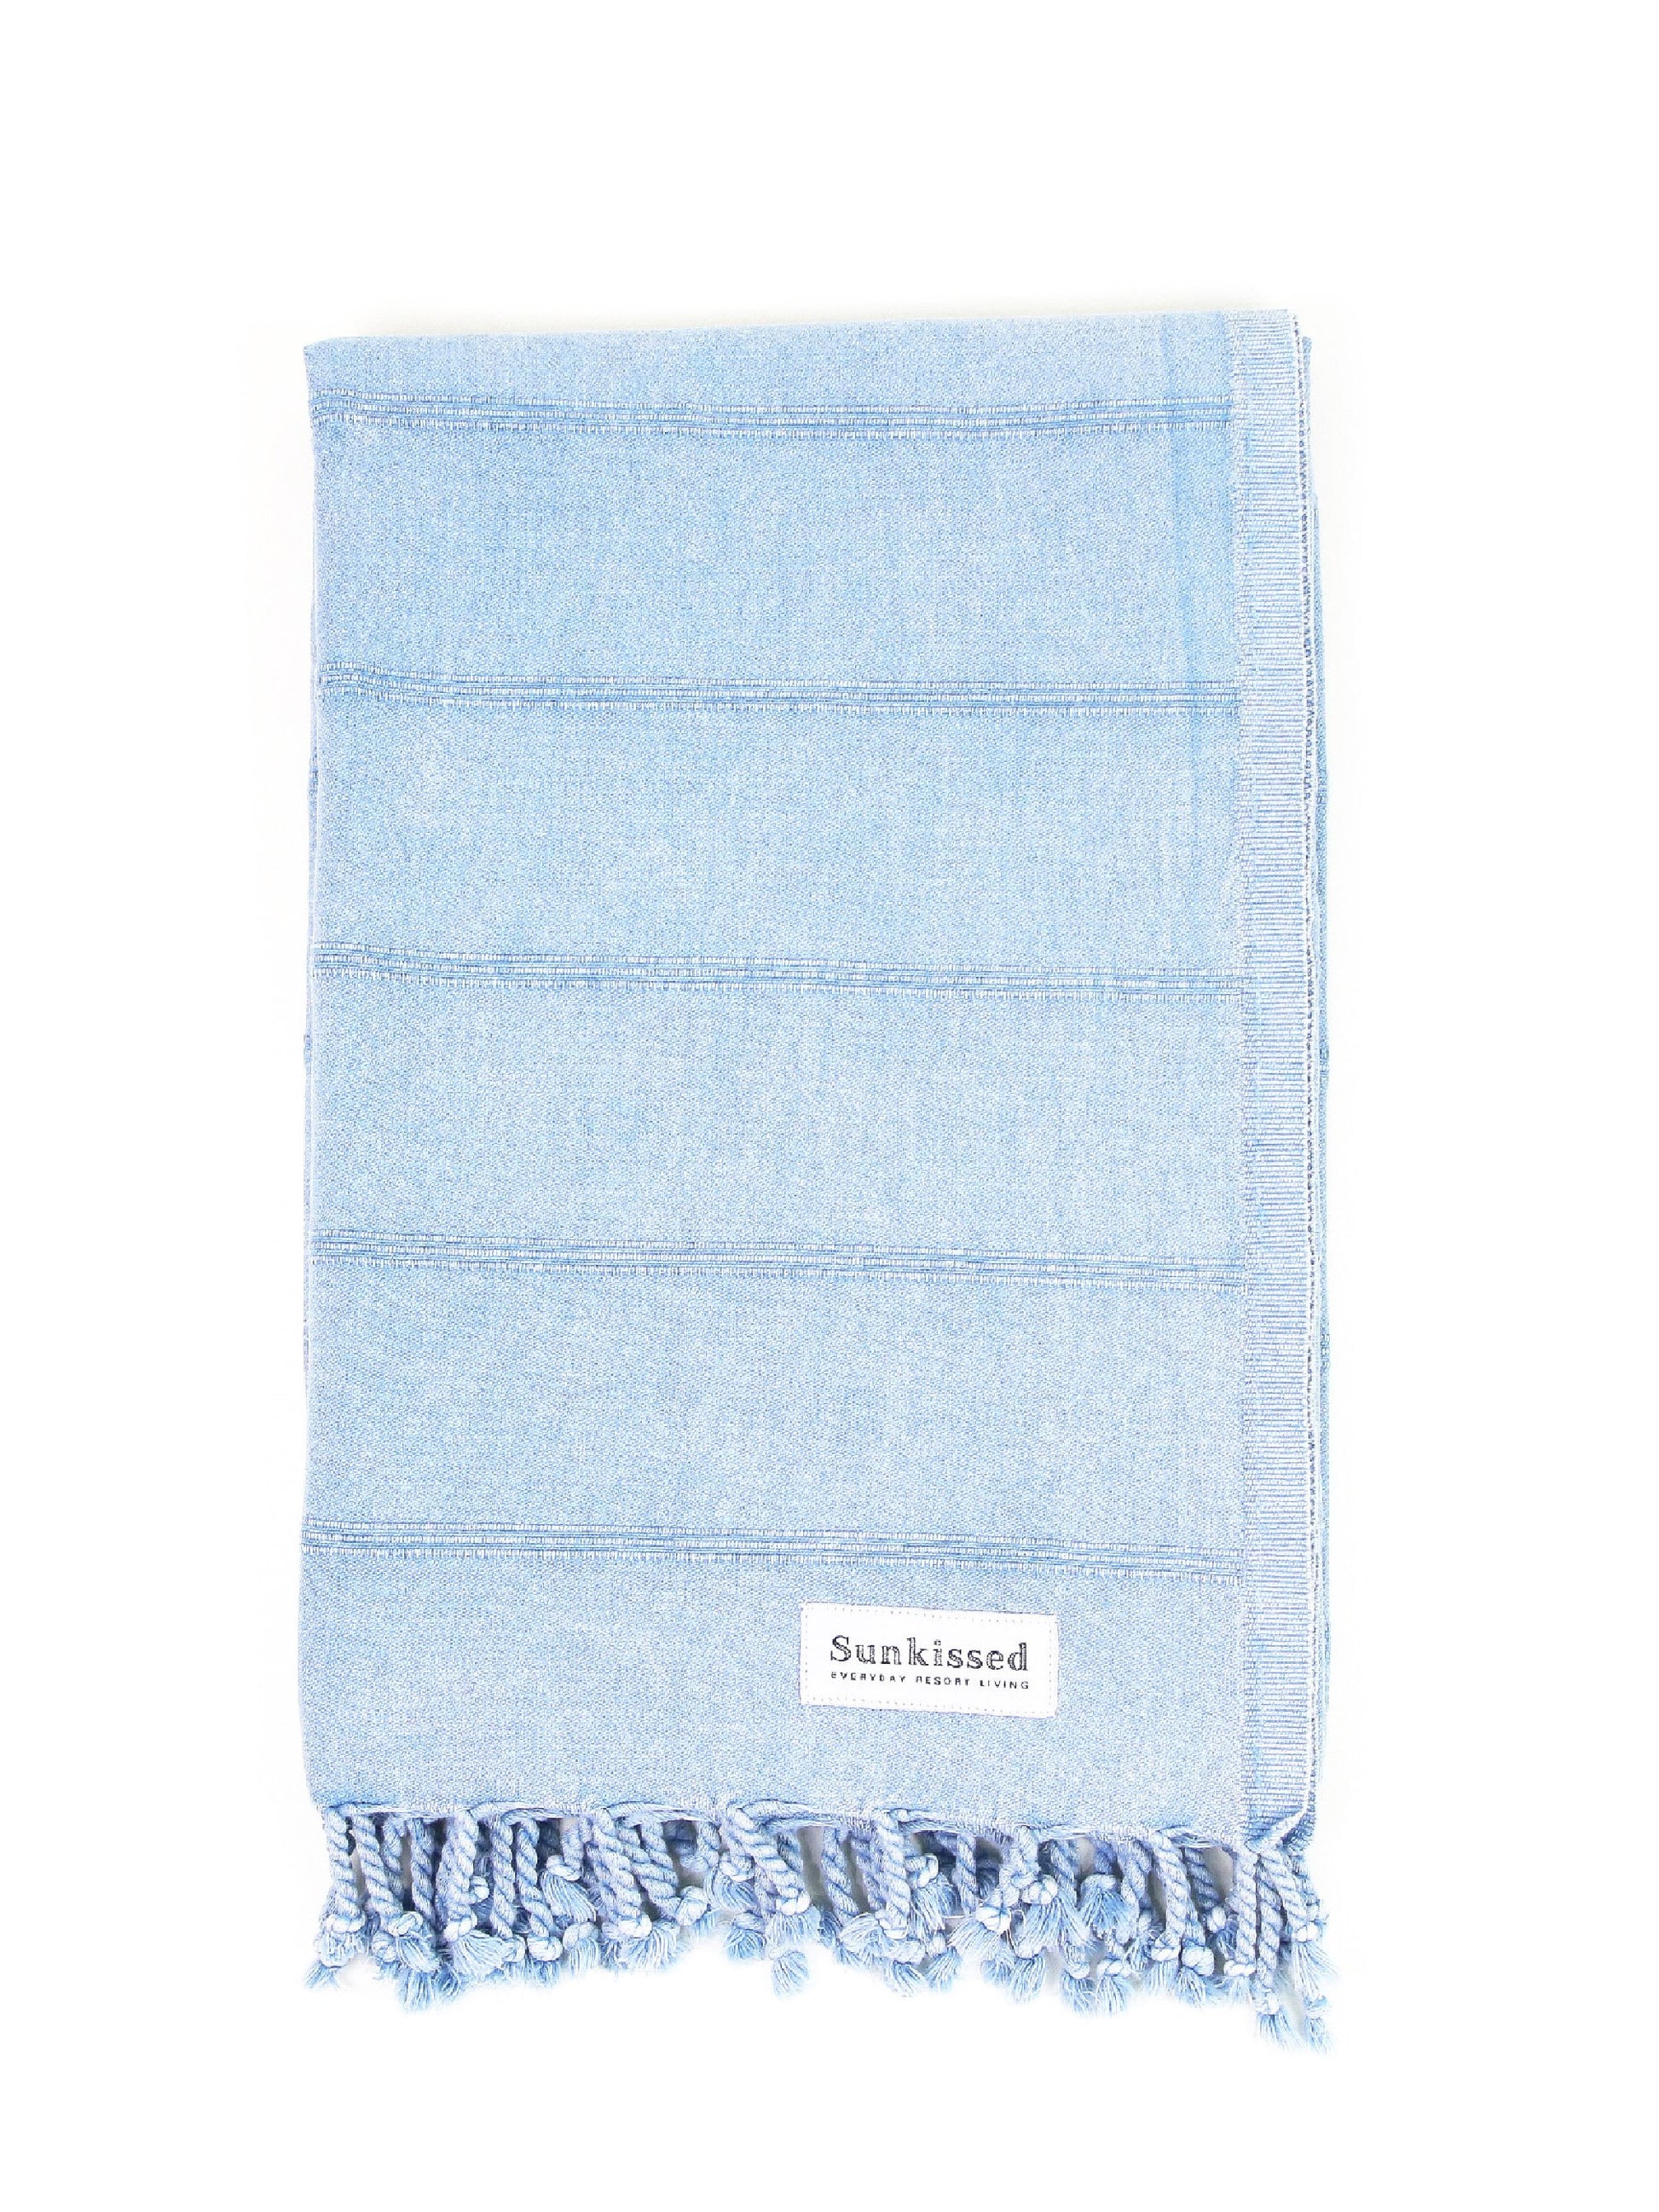 Sunkissed Mykonos Towel
Jungle Pillows